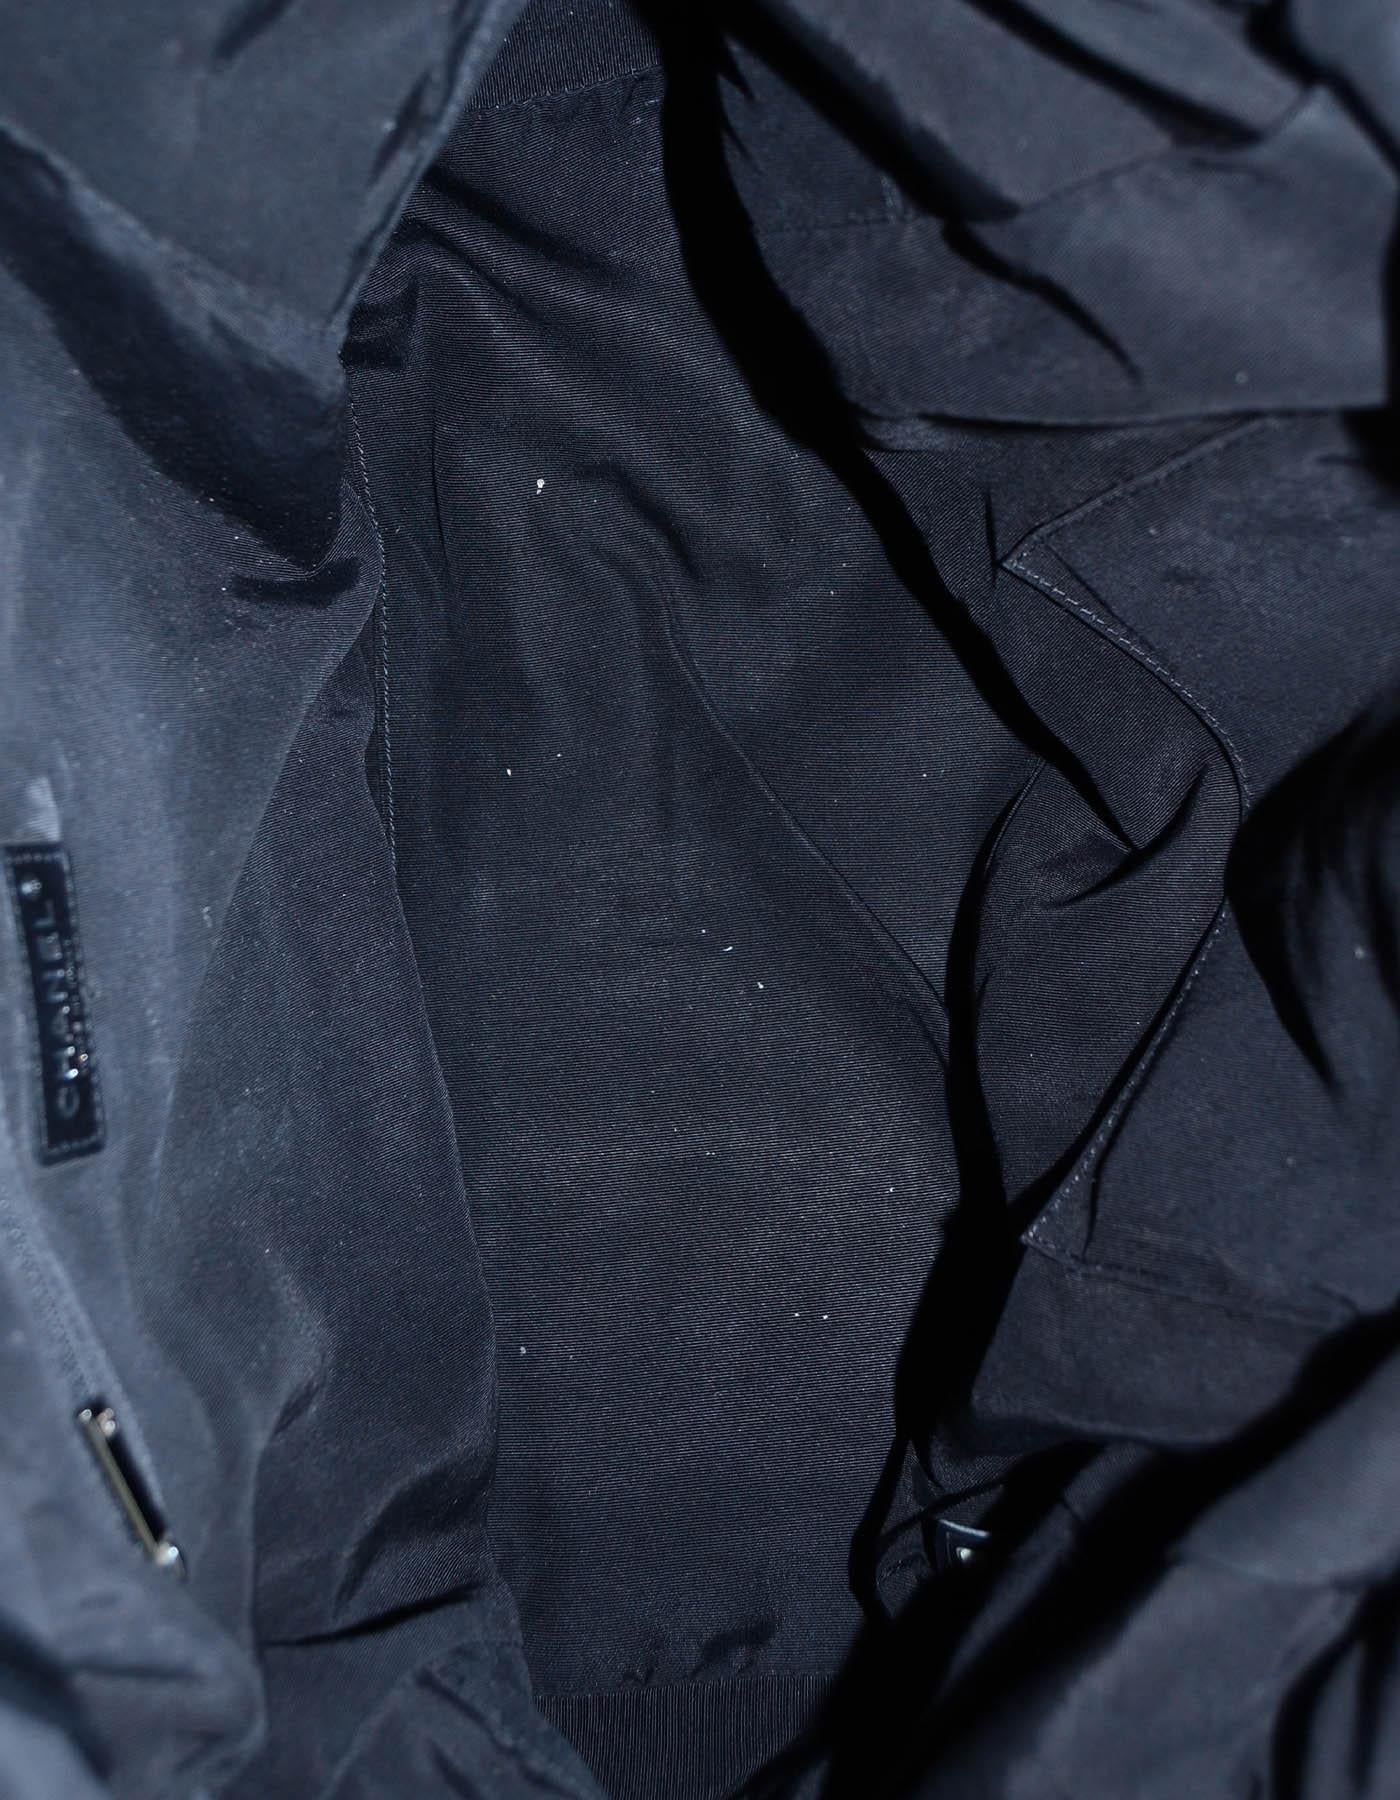 Chanel Black Aged Calfskin Leather Chevron Large Soft Bowling Bag rt. $4, 200 5